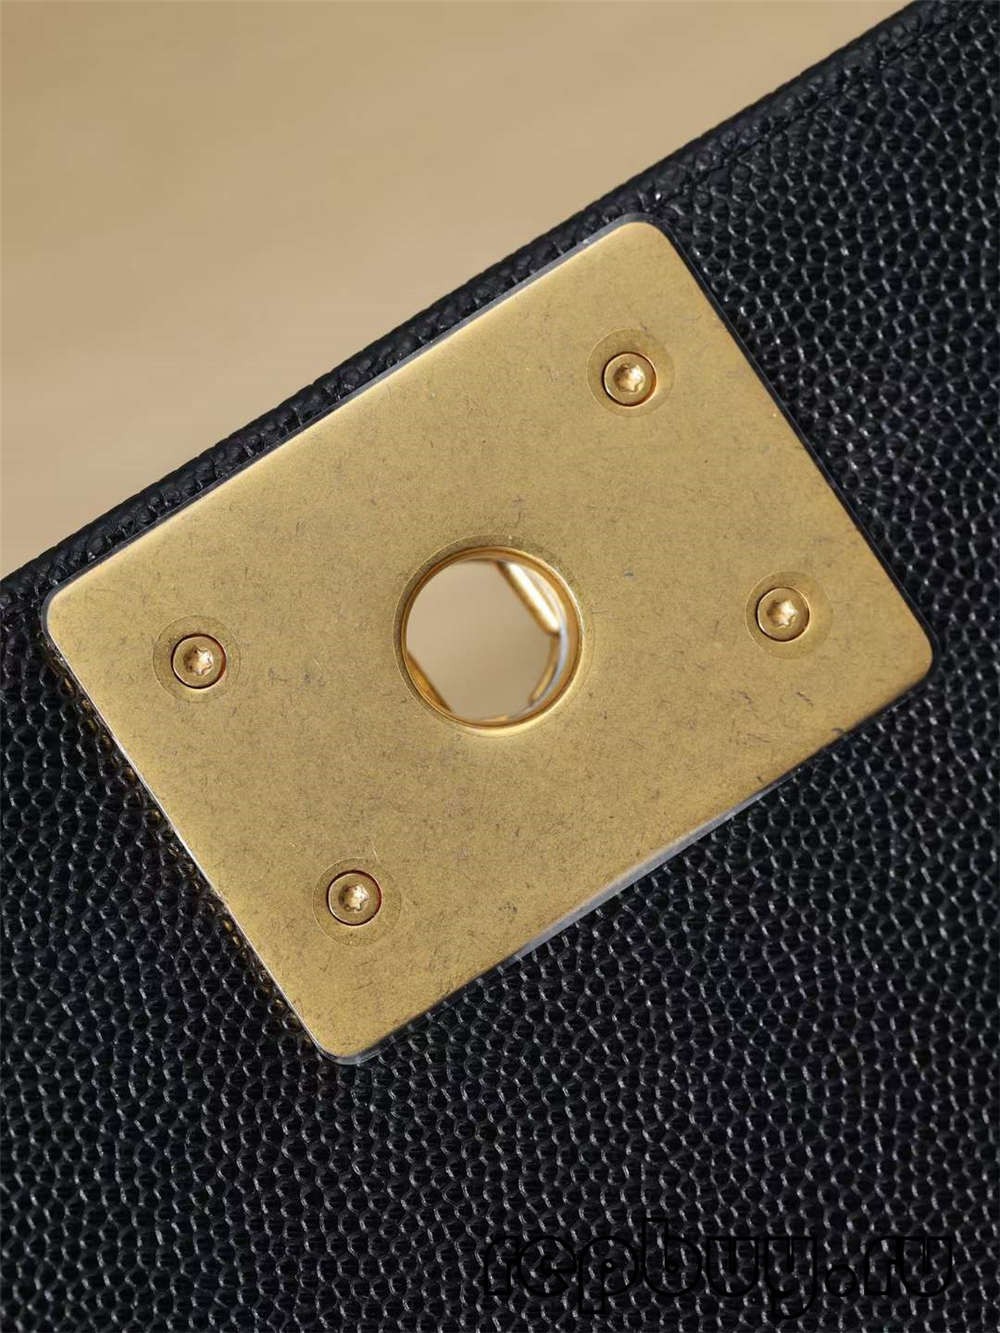 Chanel Le boy top replica handbags small gold buckle inner label and logo details (2022 Latest)-Best Quality Fake designer Bag Review, Replica designer bag ru